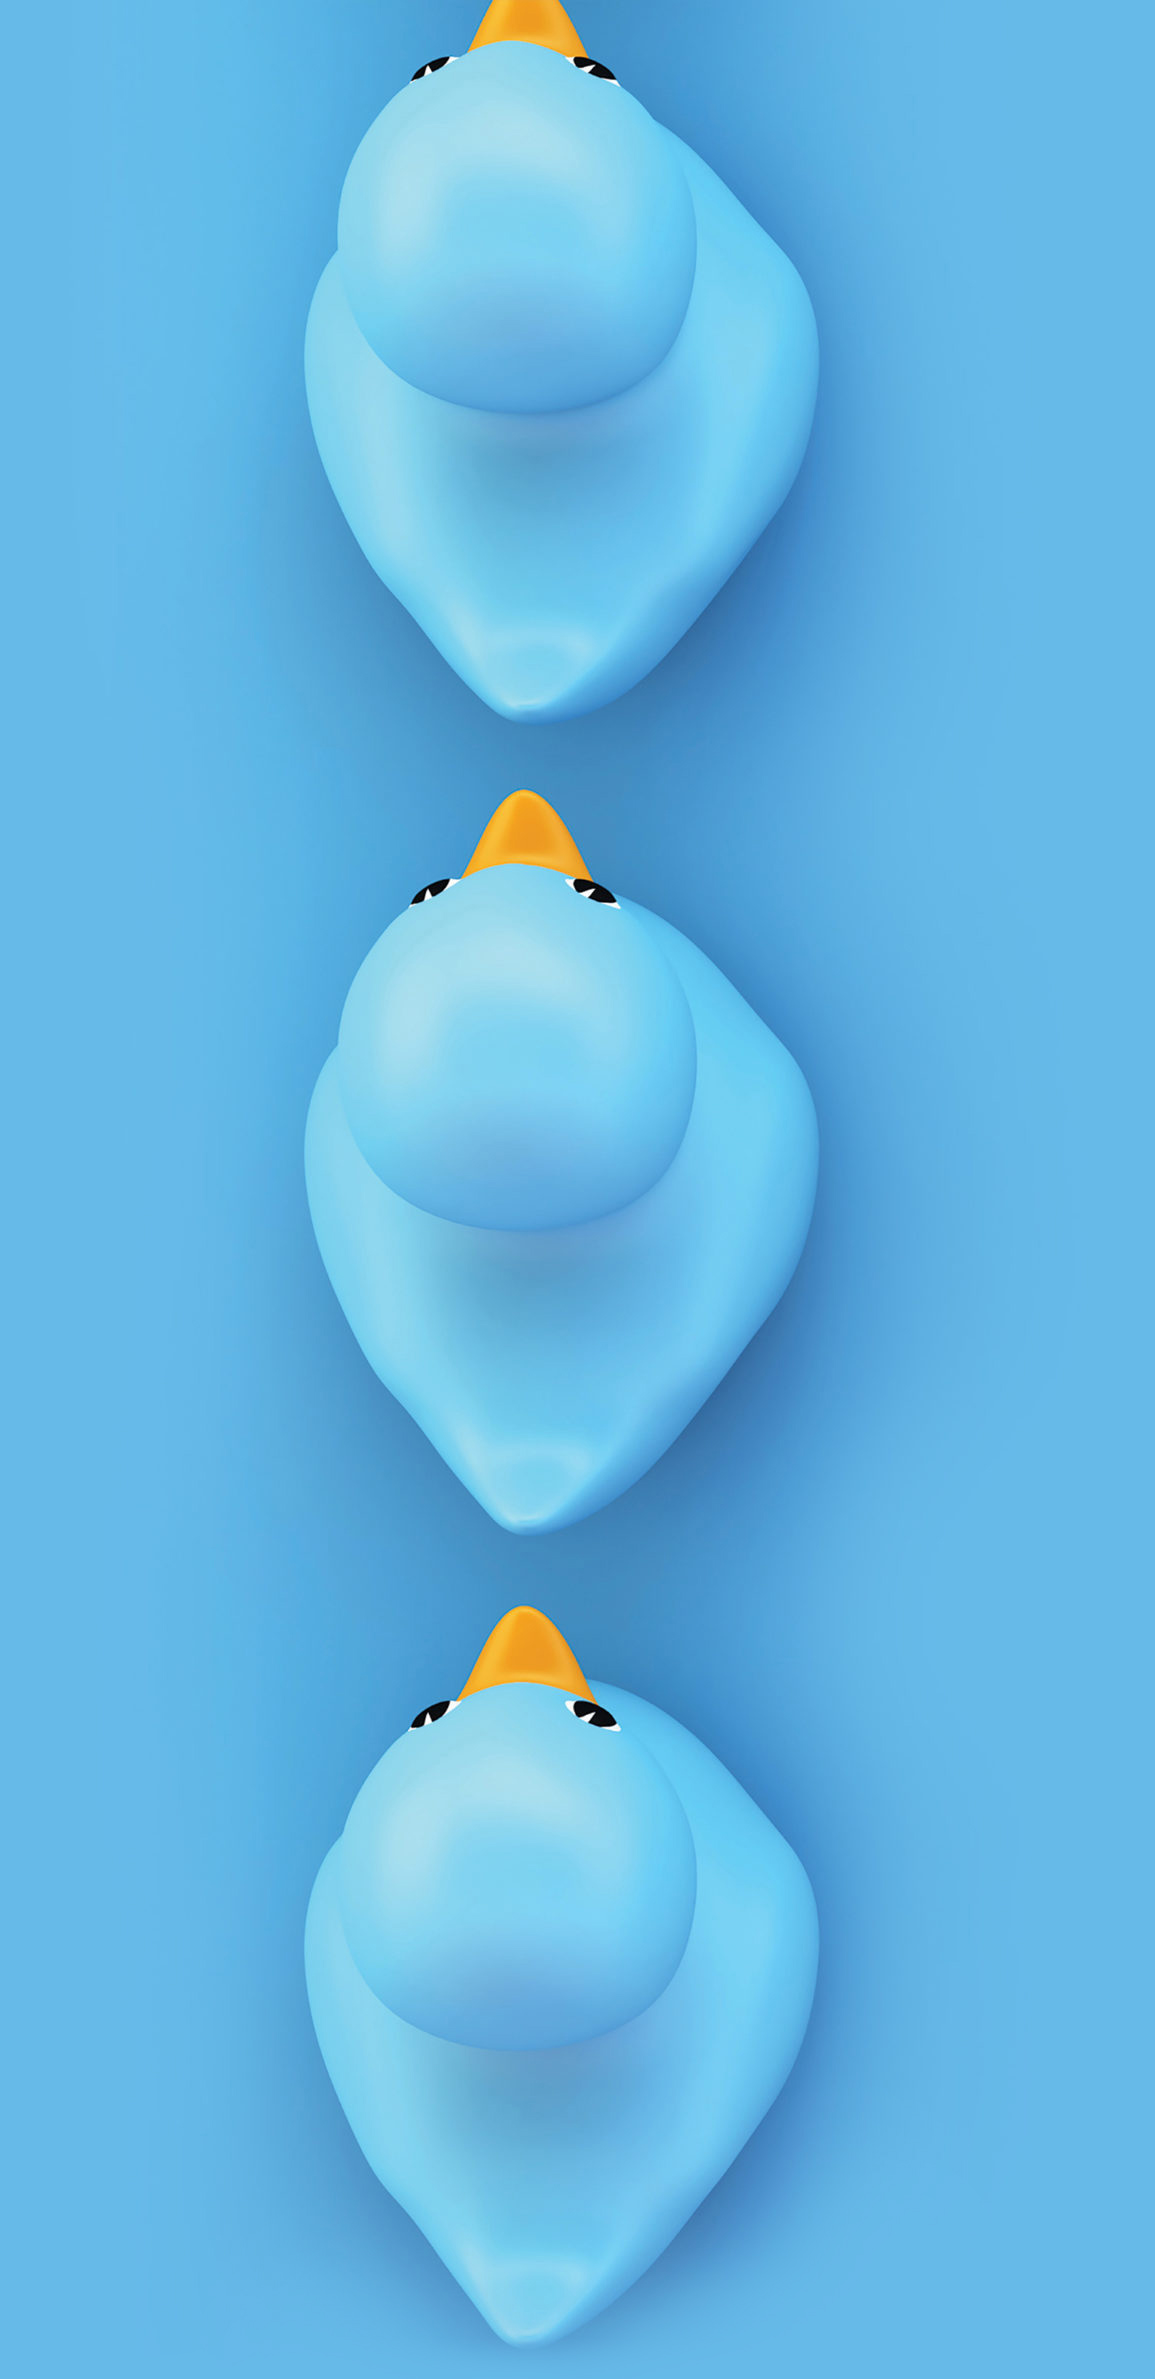 Blue rubber ducks in a row